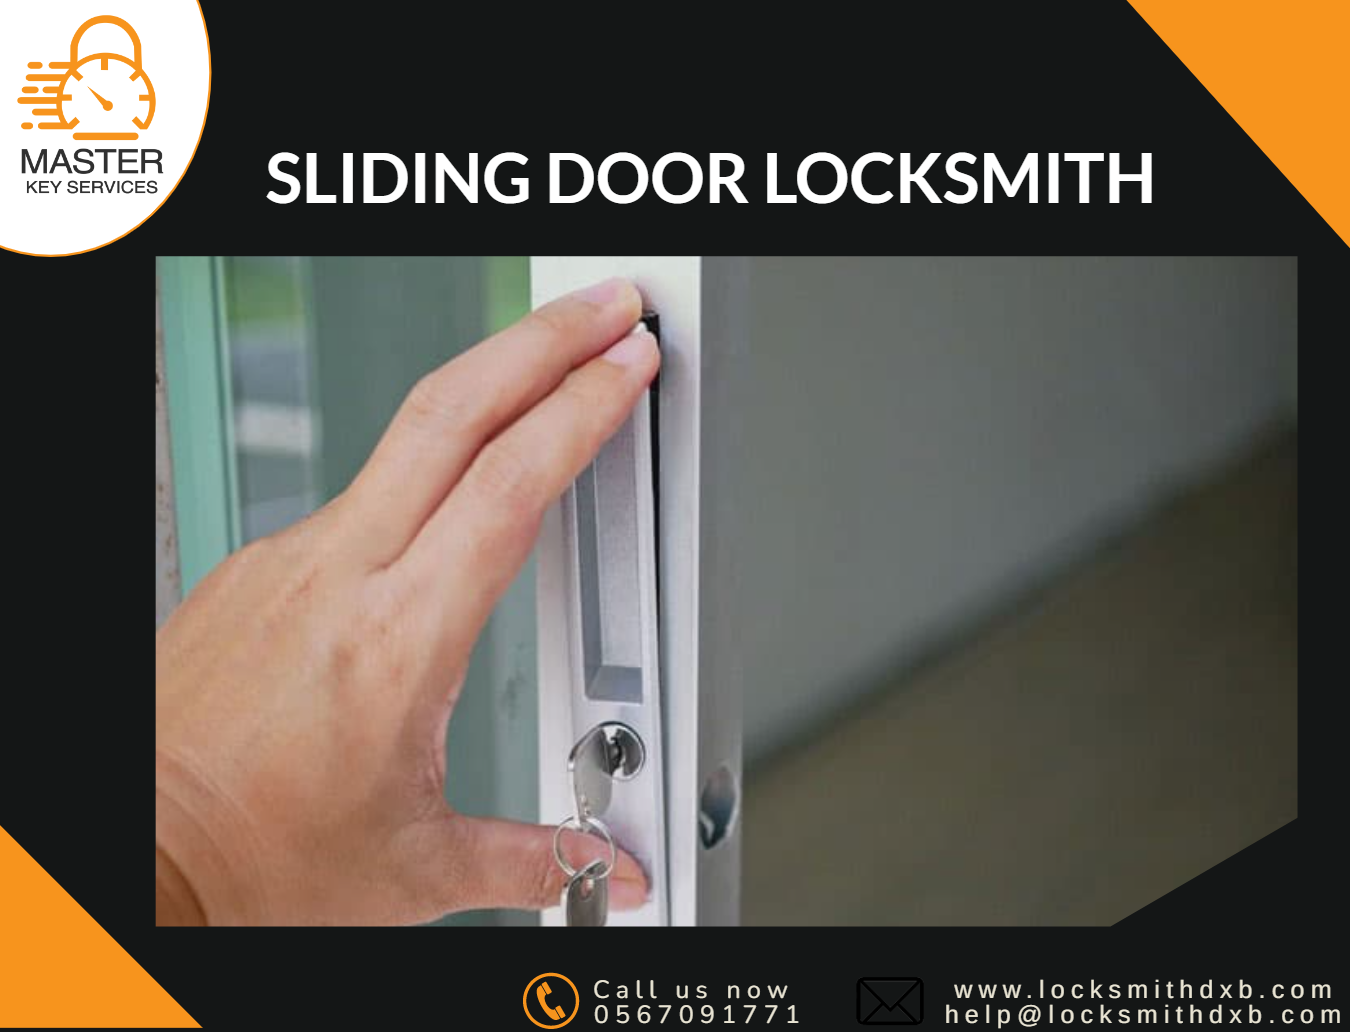 Sliding door locksmith